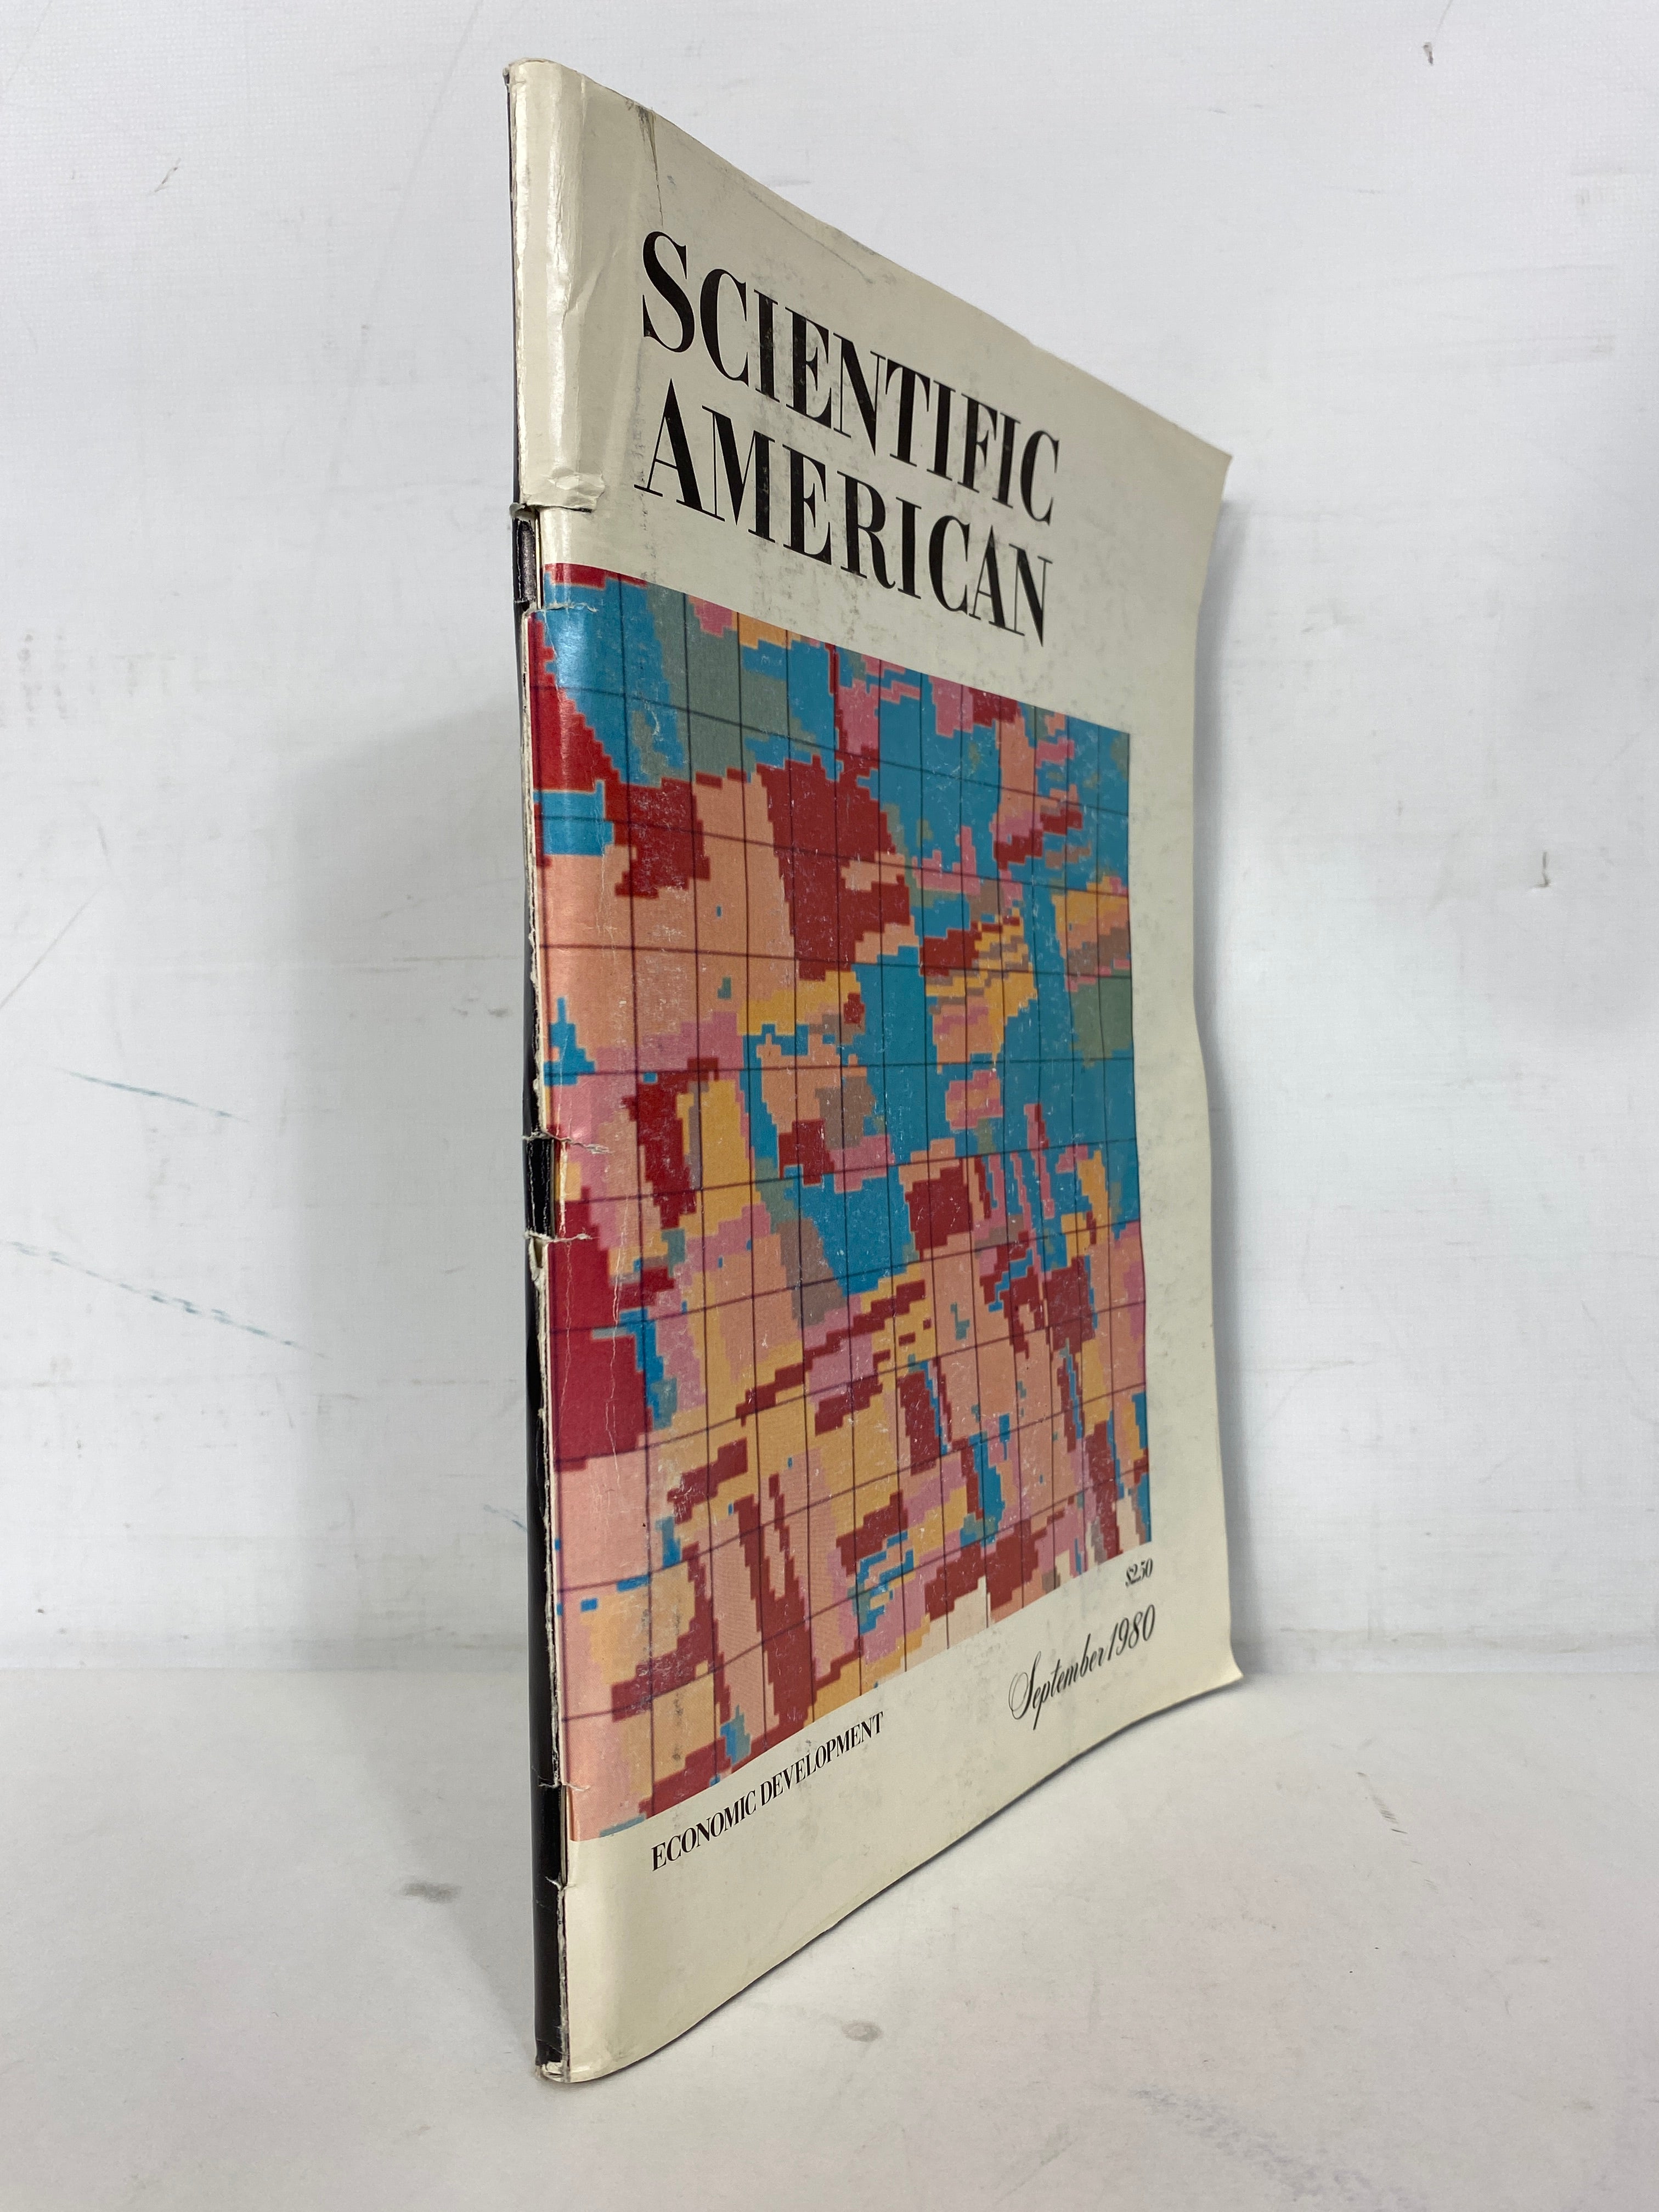 Scientific American September 1980 Economic Development, World Economy of the Year 2000 SC